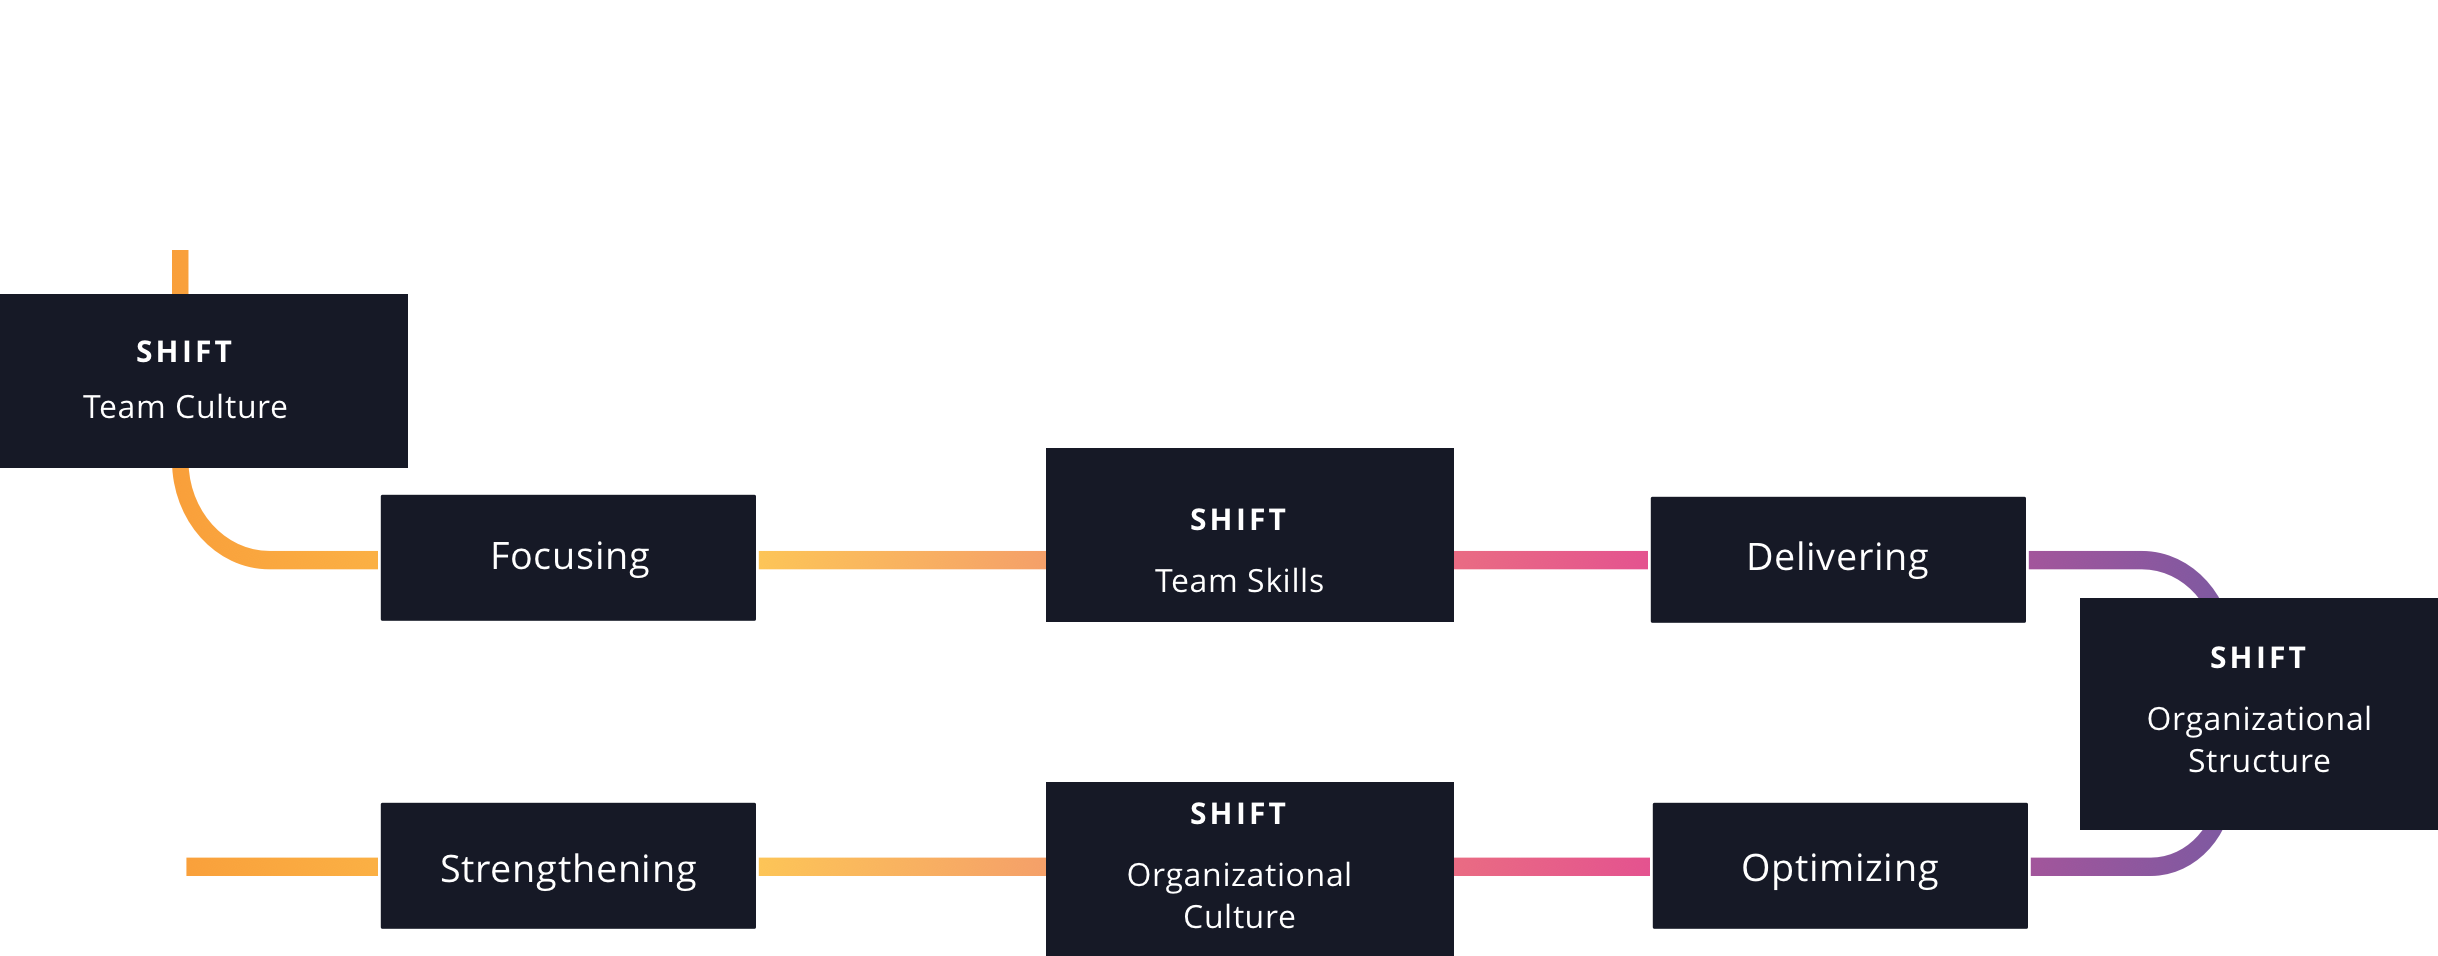 The Agile Fluency Model